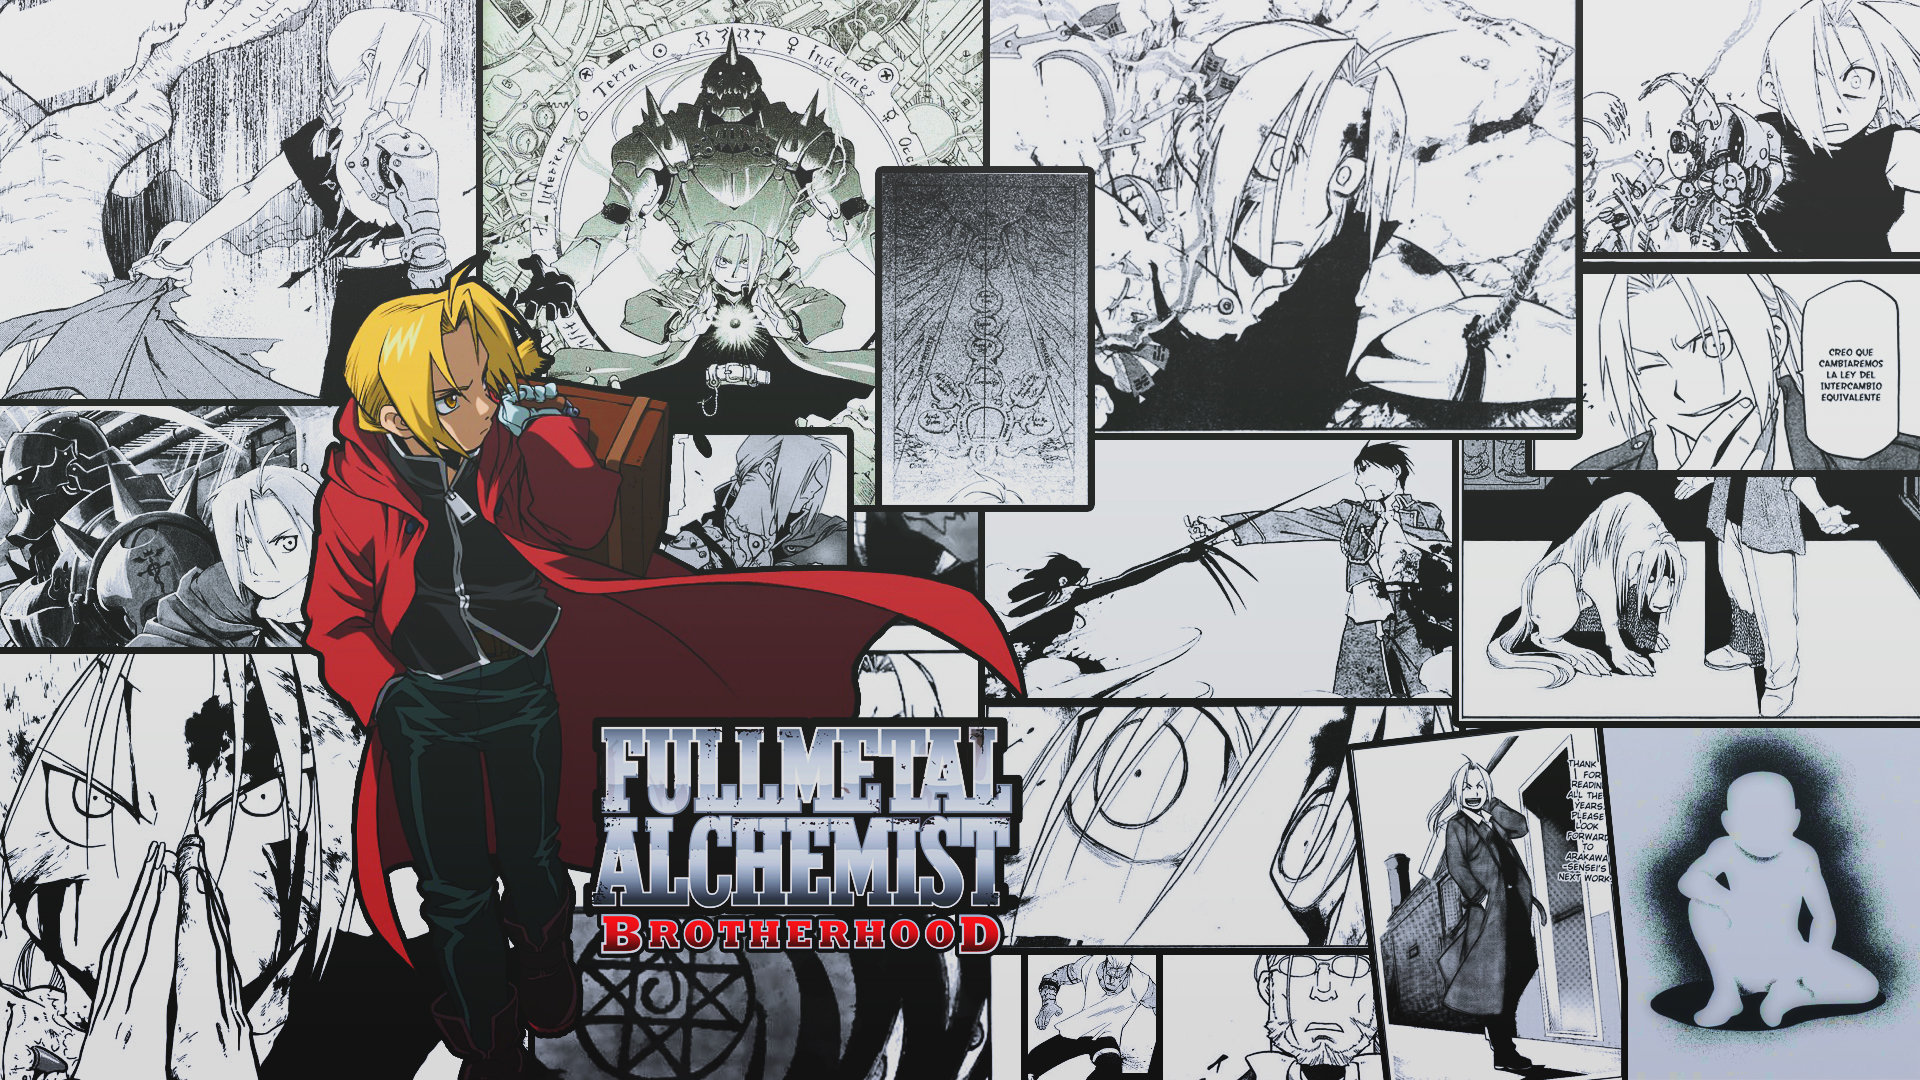 fullmetal alchemist bruderschaft wallpaper,karikatur,comics,comic,fiktion,schwarz und weiß